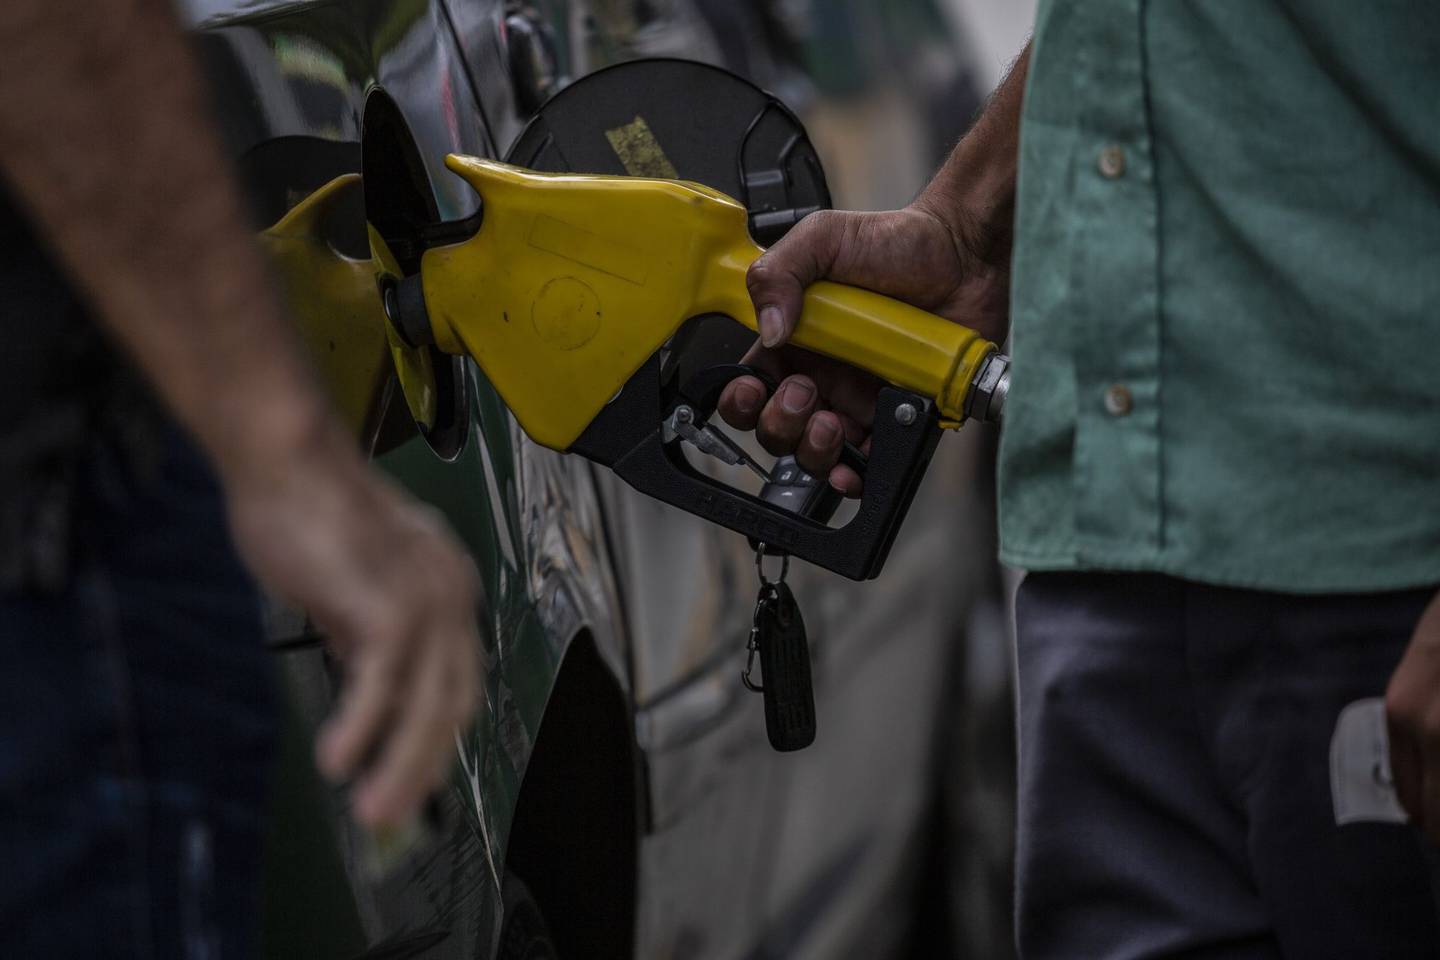 A worker refuel a vehicles at a Petrobras gas station in Rio de Janeiro, Brazil.